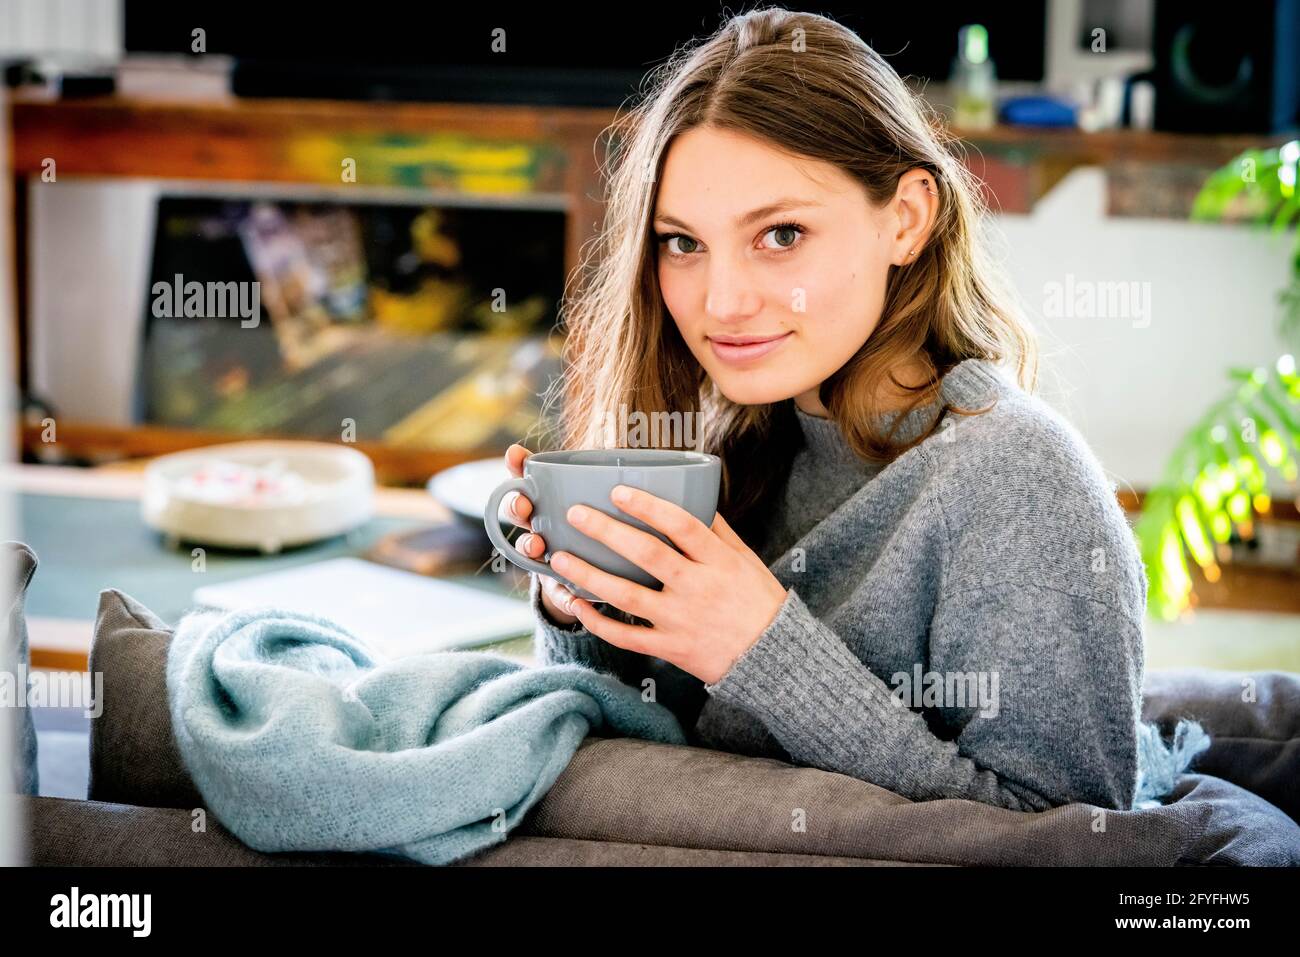 Woman drinking hot beverage. Stock Photo